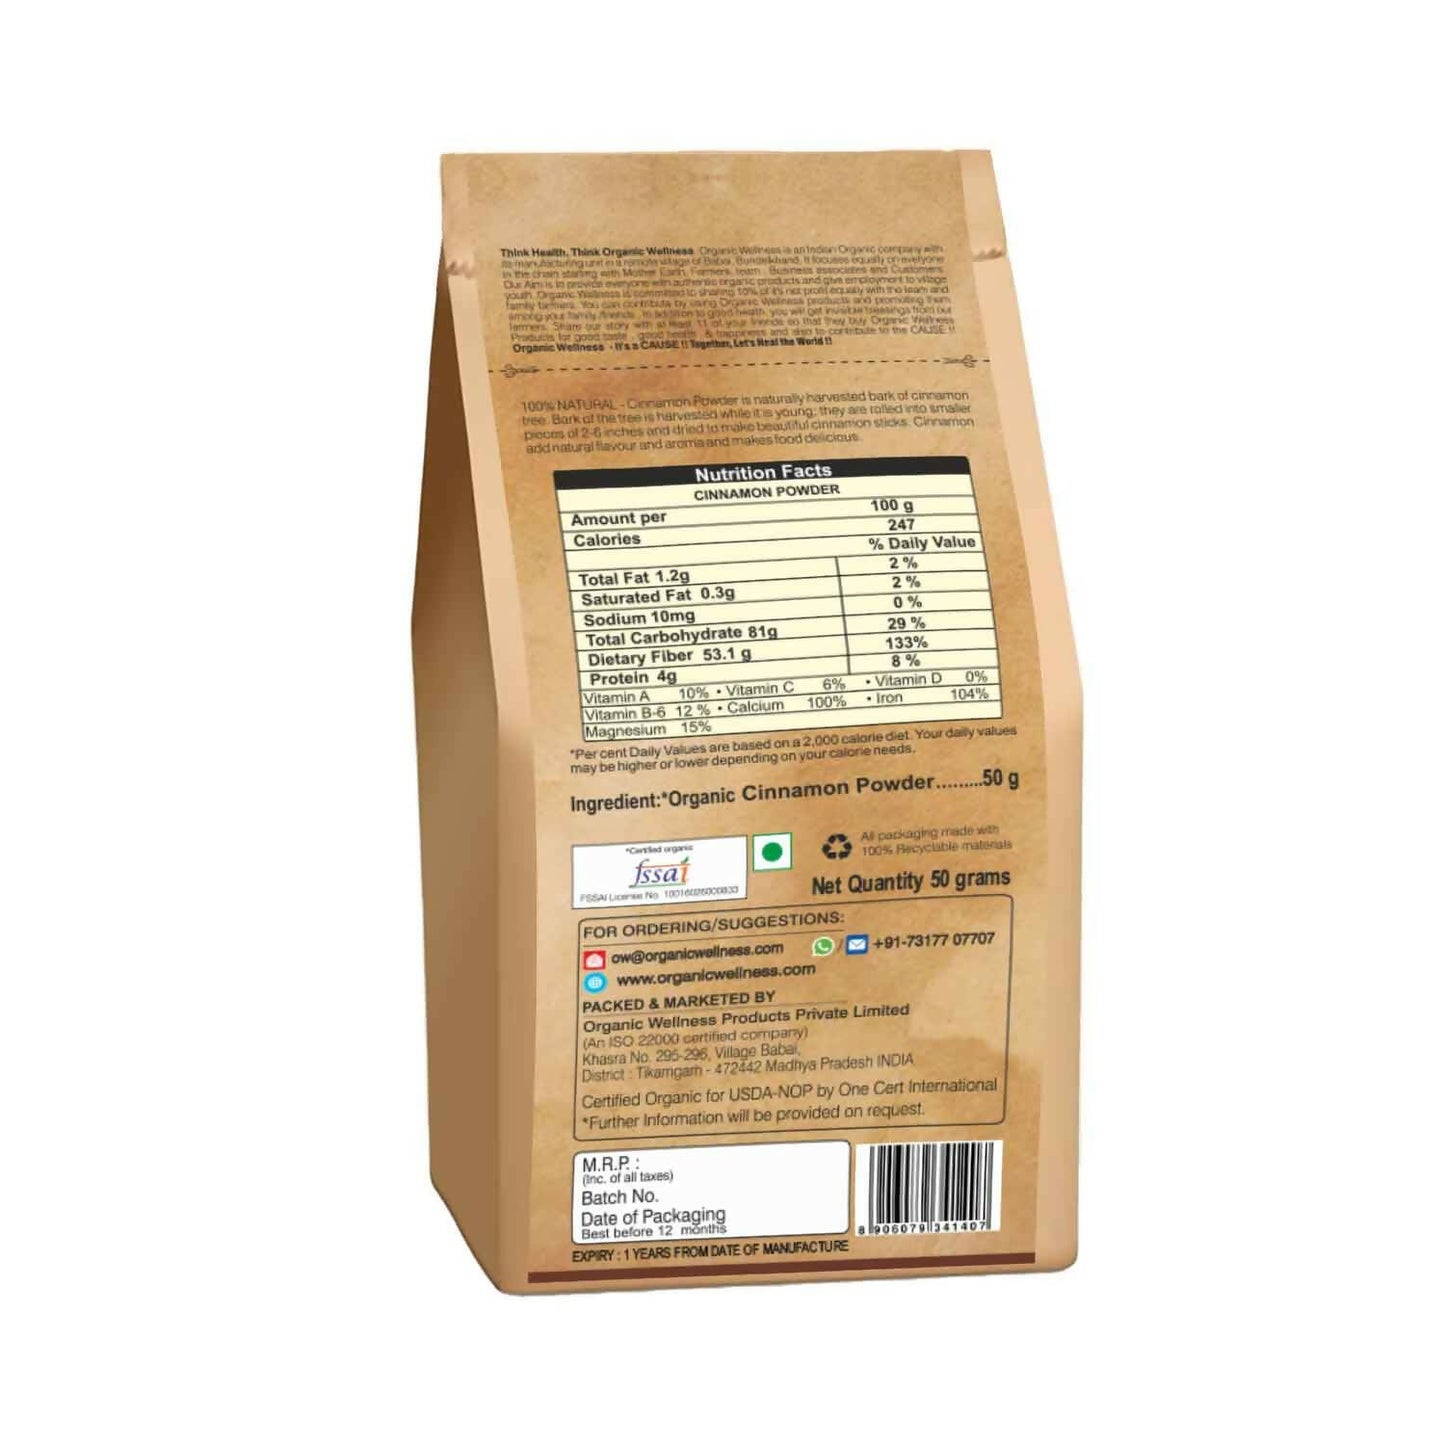 Organic Wellness Cinnamon Powder